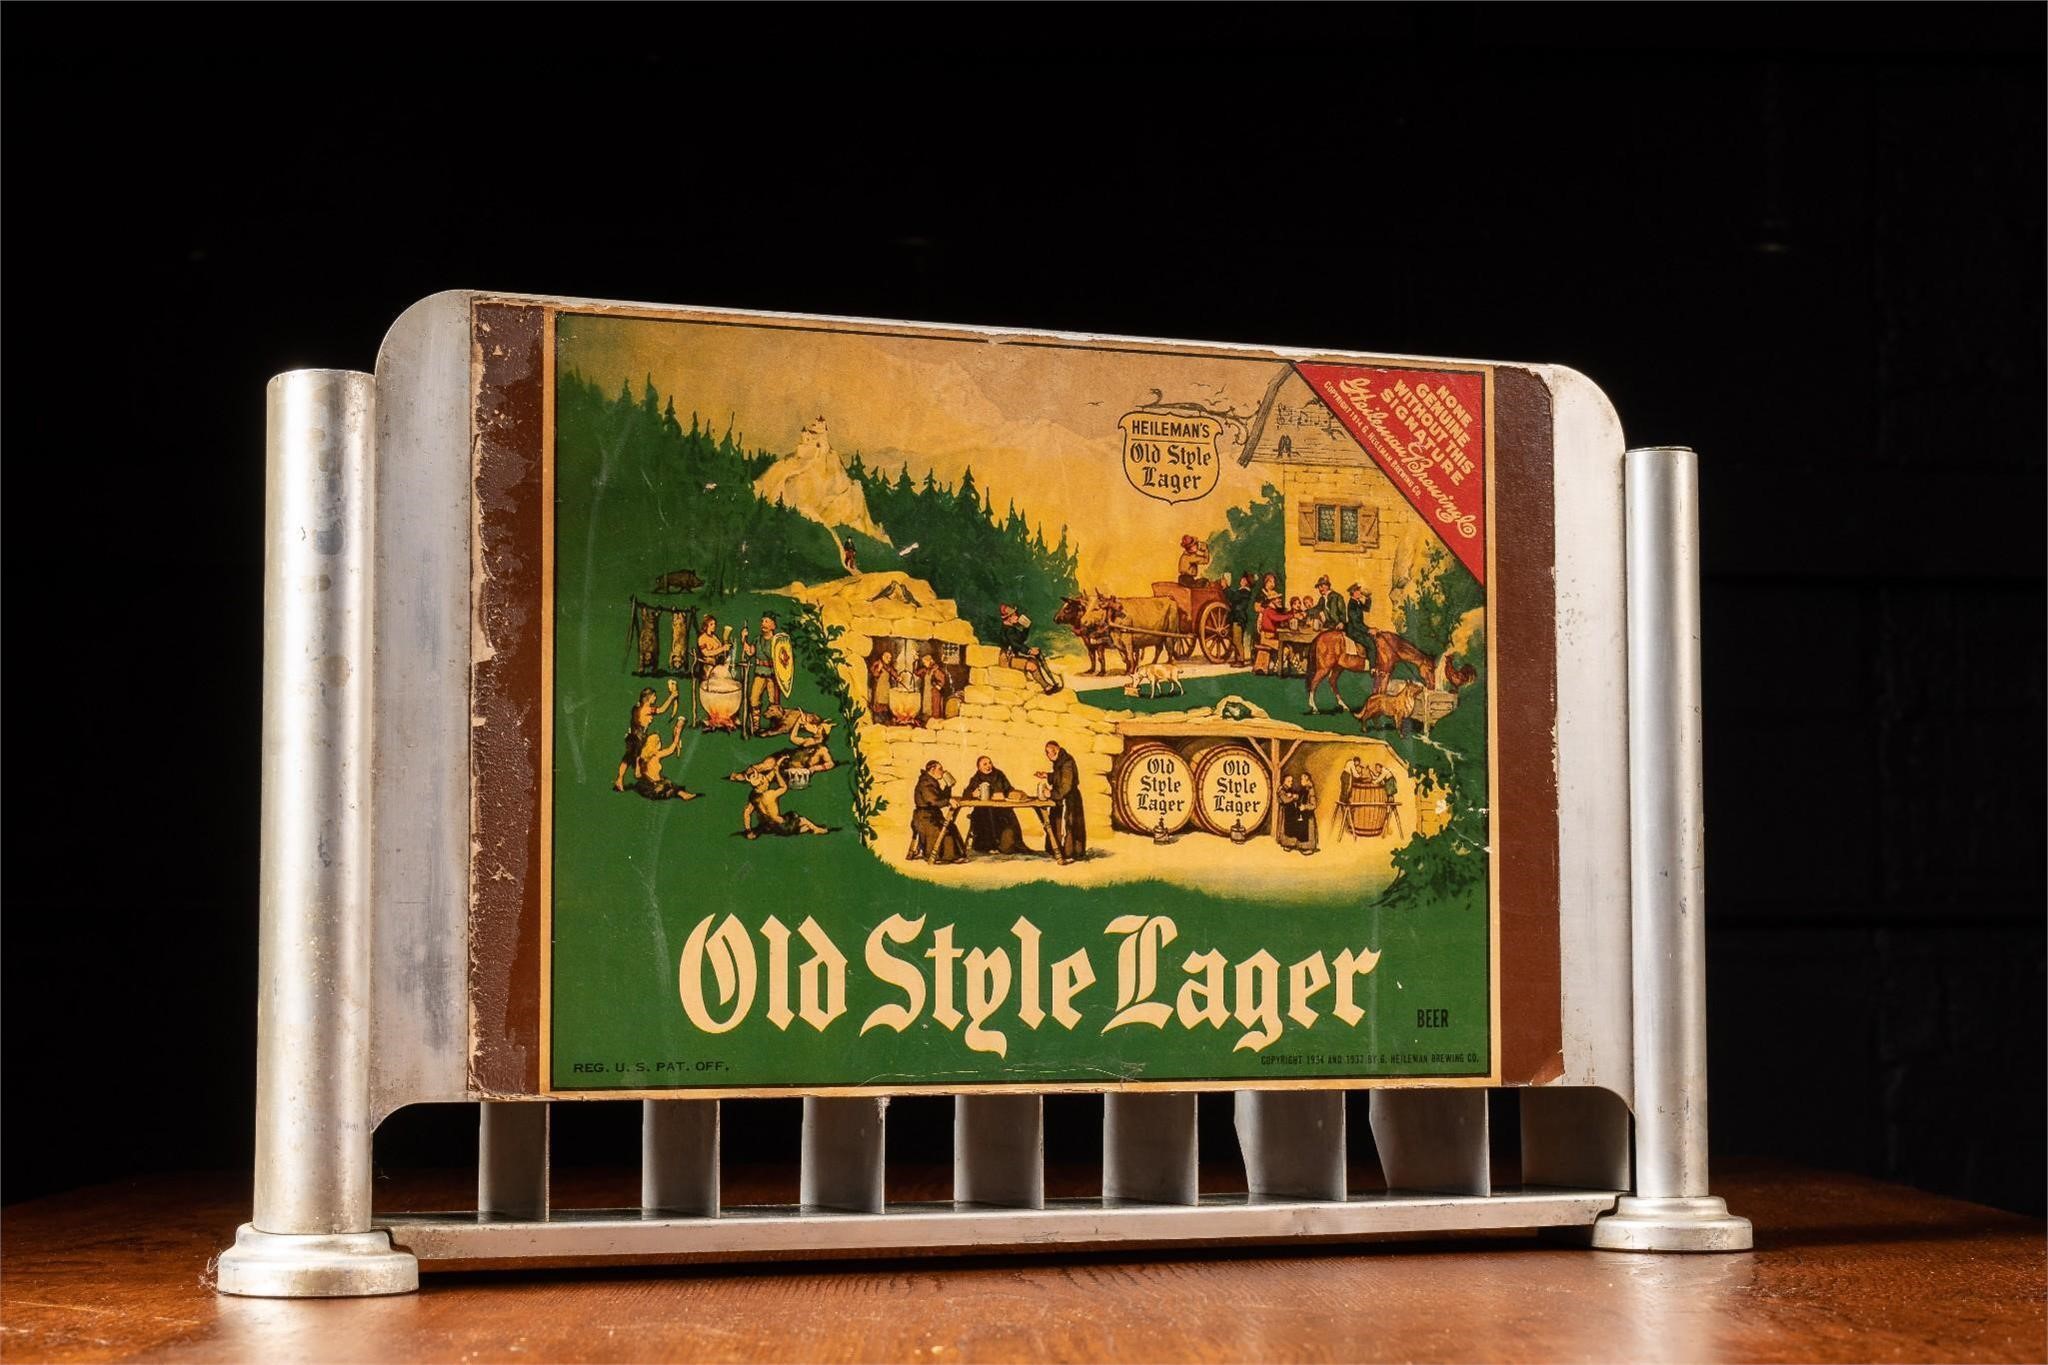 C. 1937 Old Style Beer POS Cigarette Display